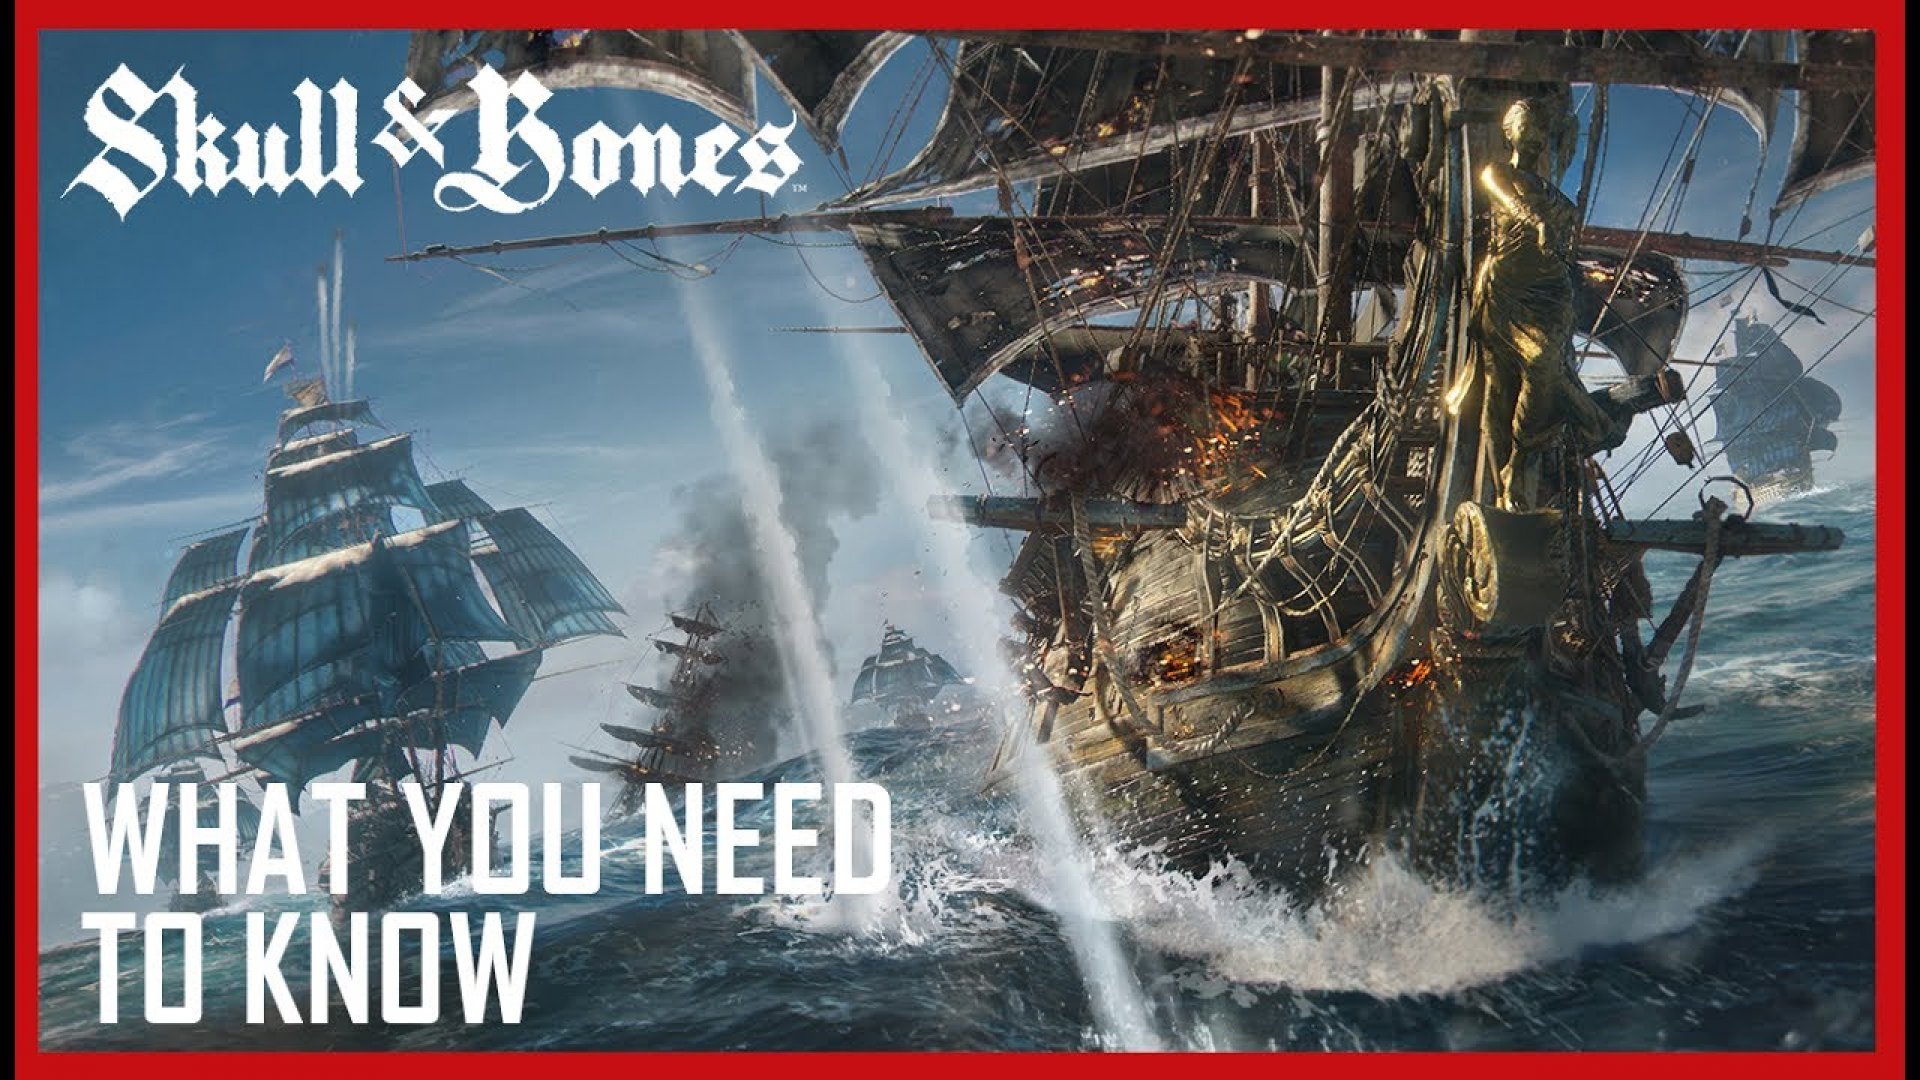 Game of bones. Пиратский корабль. Skull & Bones (игра). World of Sea Battle корабли. Игра “Skull & Bones” (2020).